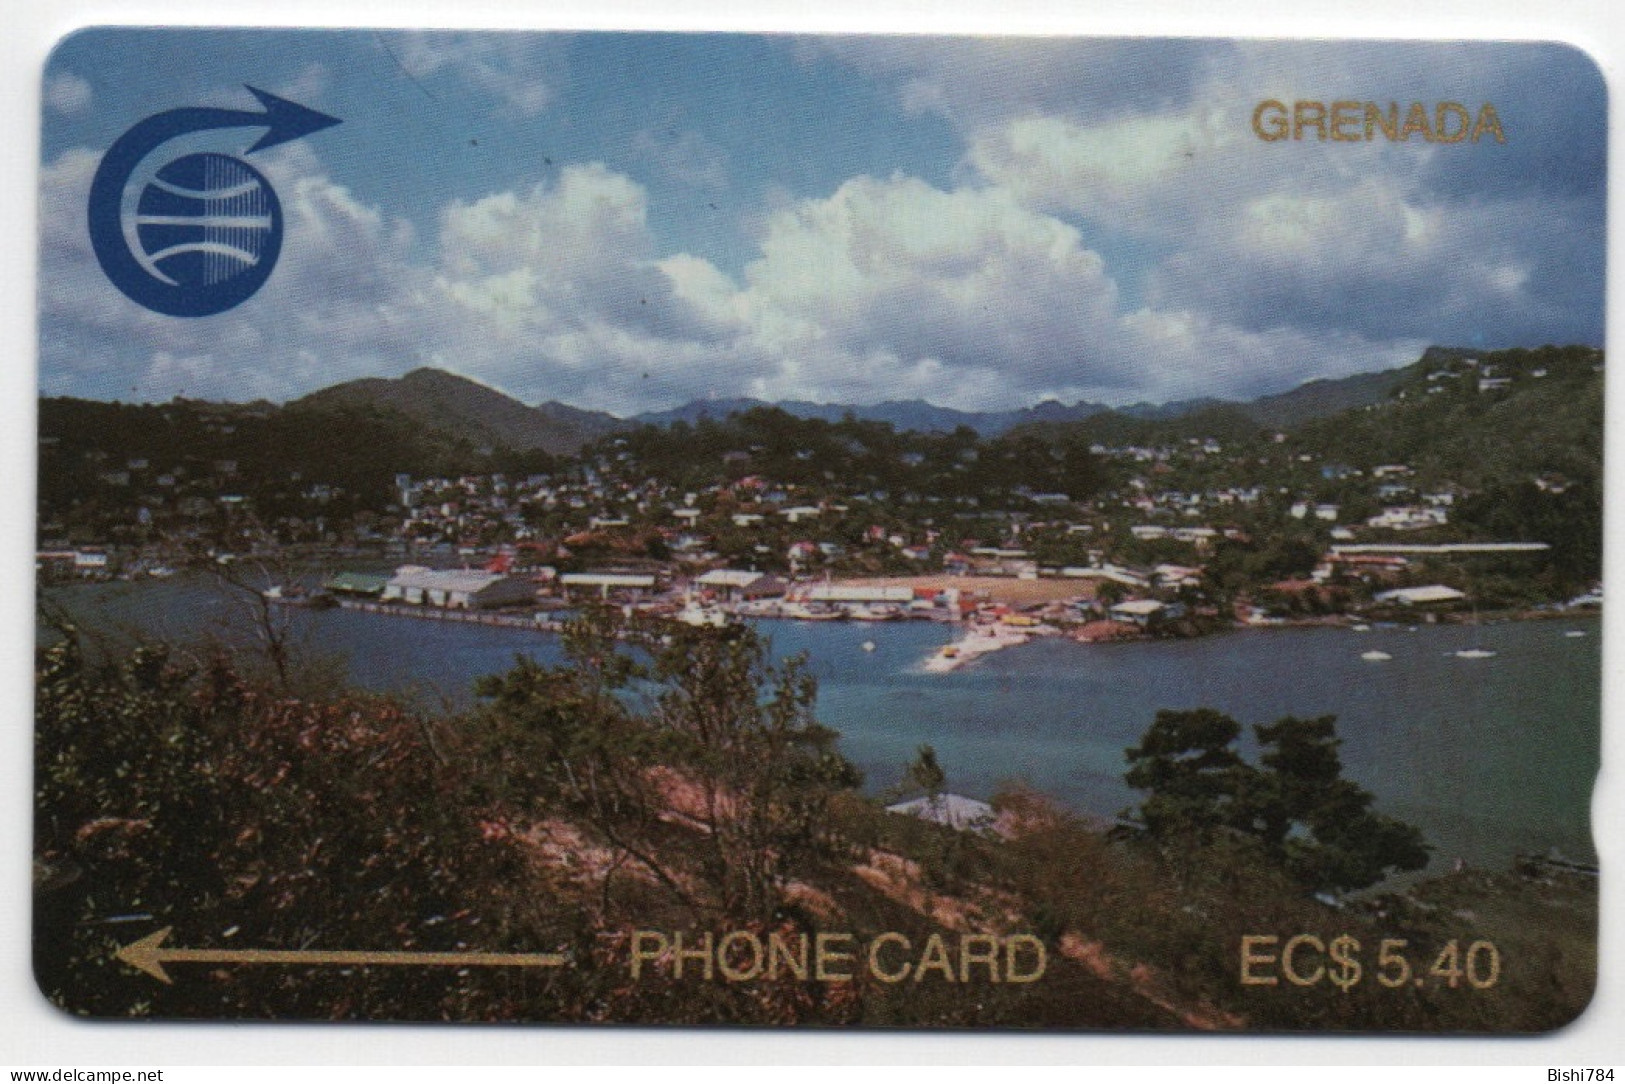 Grenada - View Of St. George’s $5.40 (Windward Island Pack) - 2CGRA - Grenada (Granada)